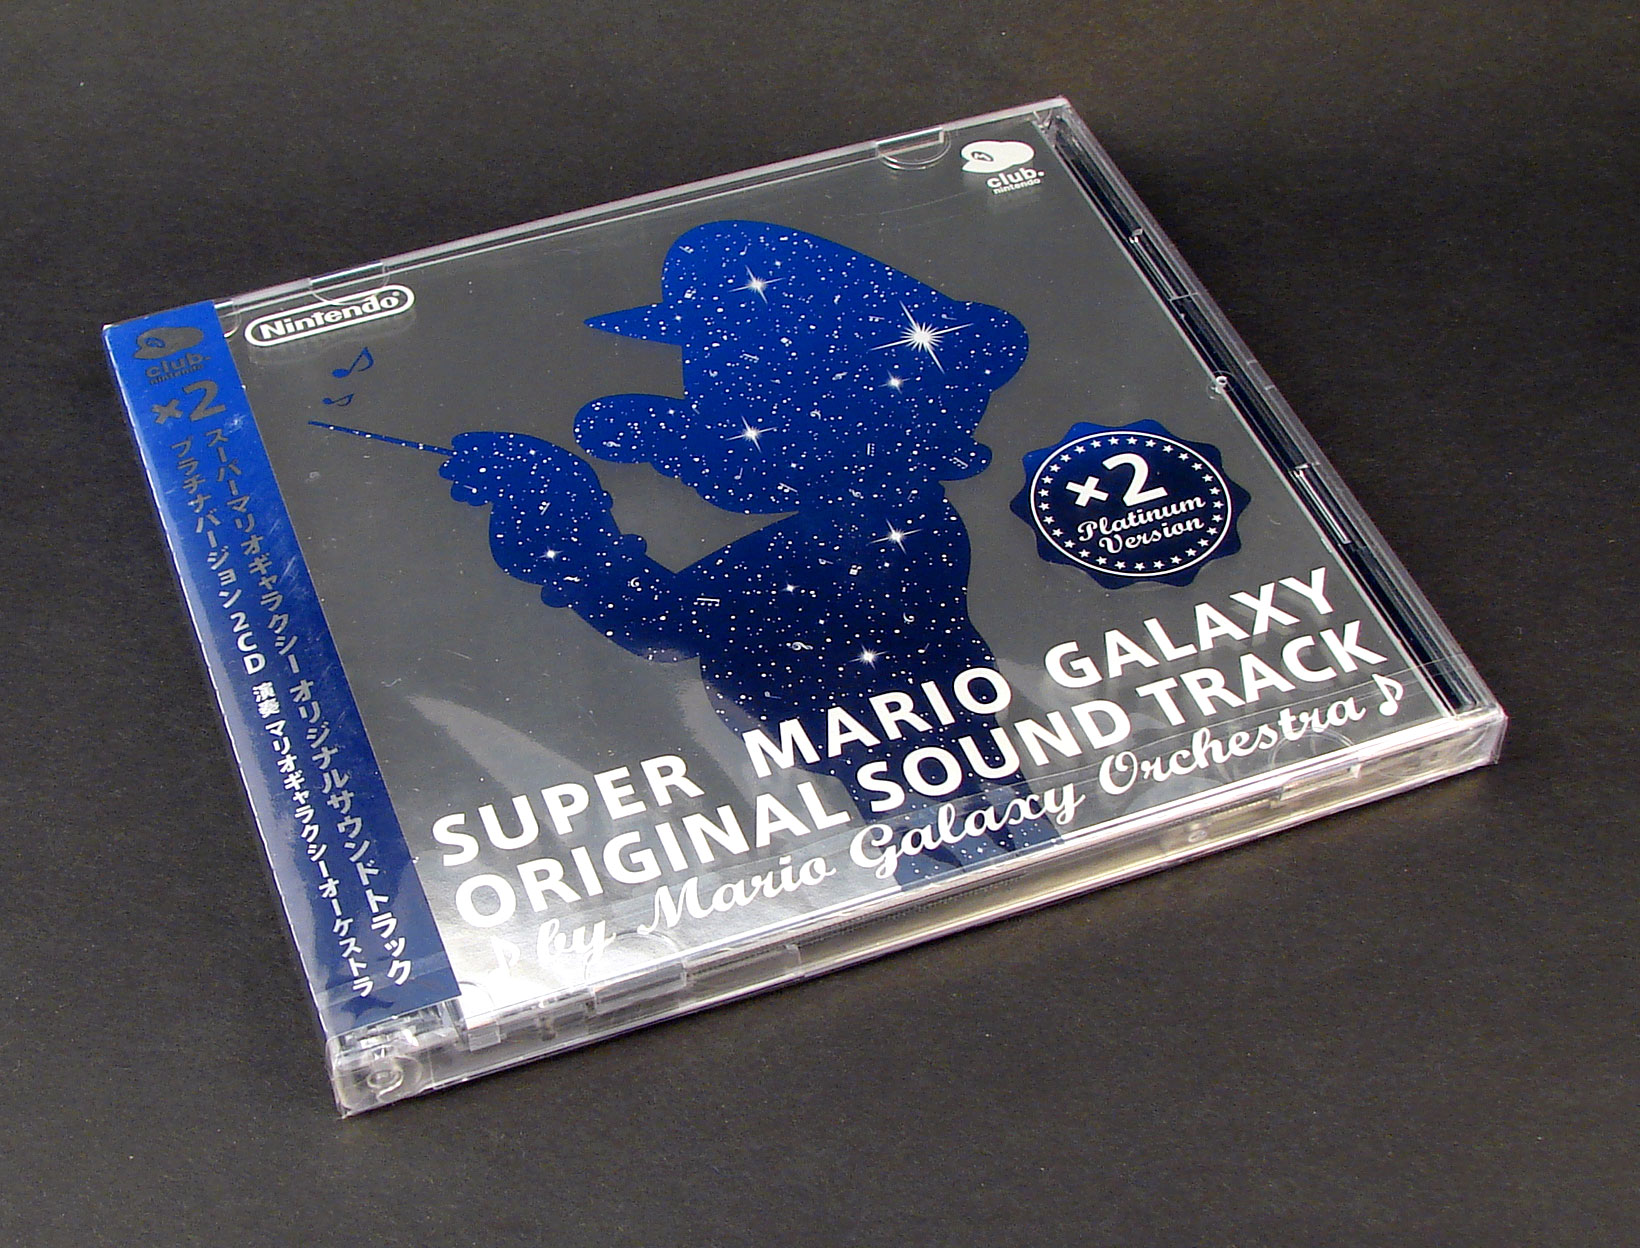 Super Mario Galaxy Original Soundtrack - Platinum Version